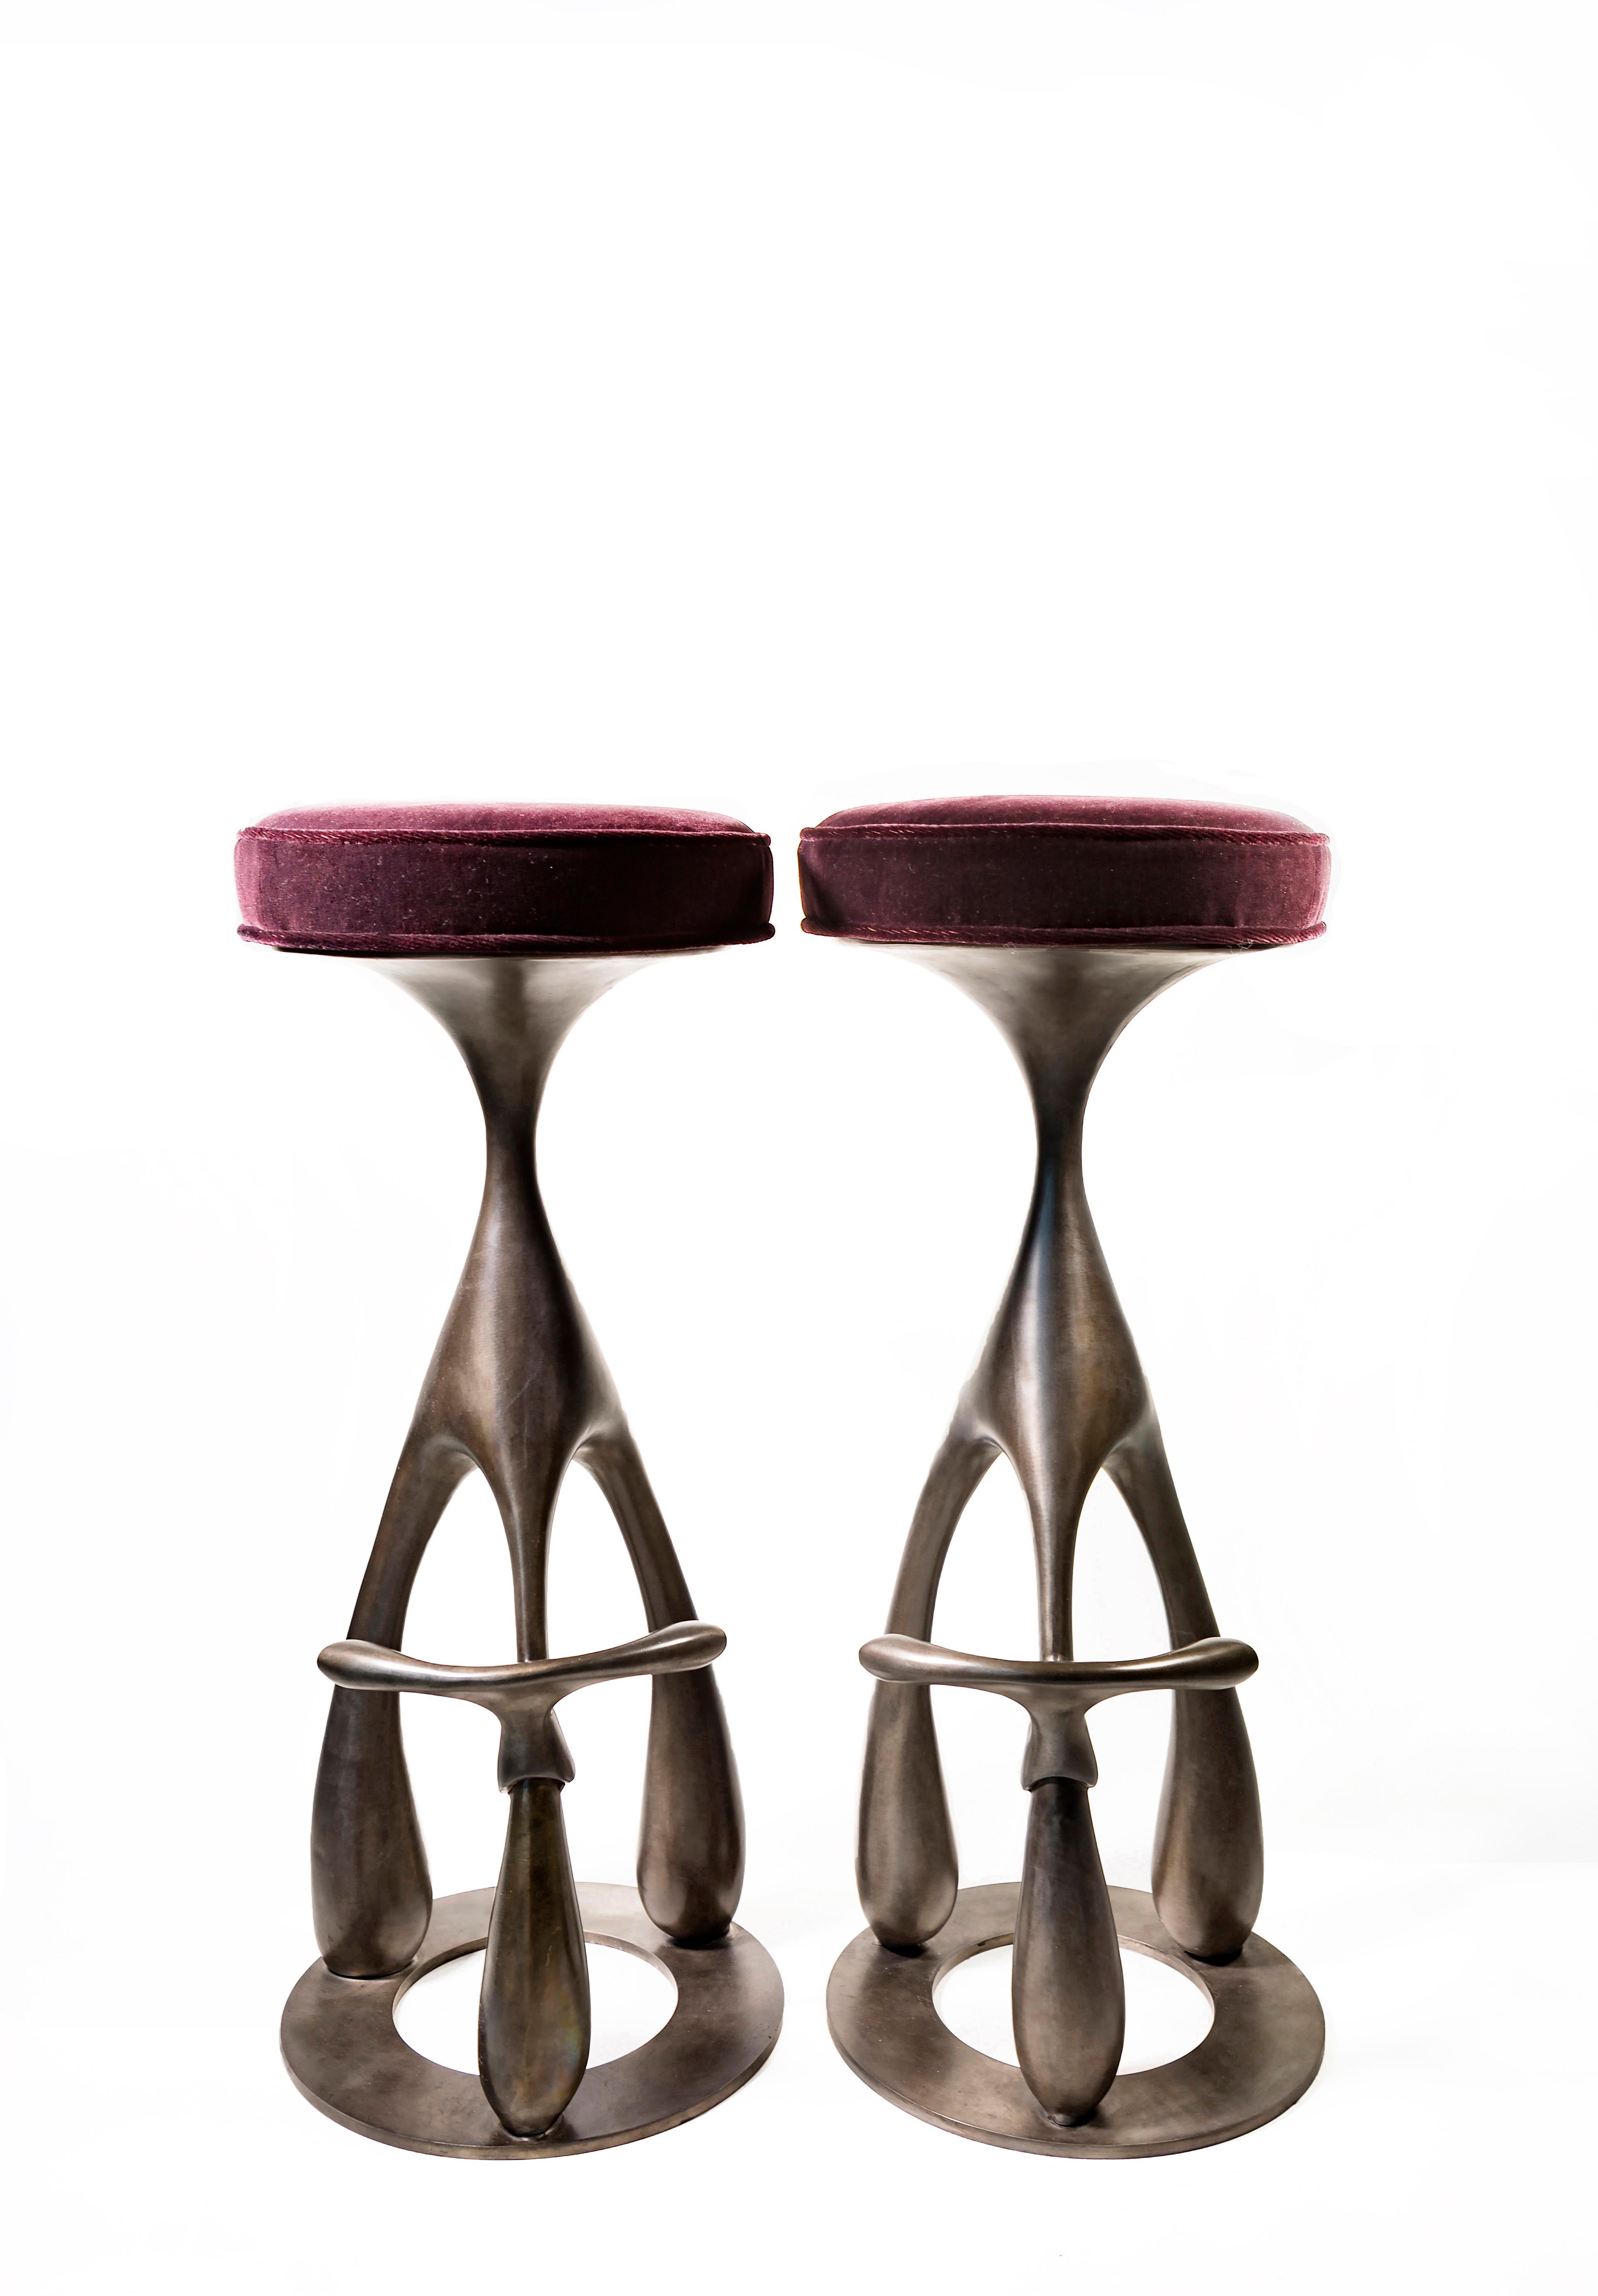 Jordan Mozer (b. 1958): East 3-Leg Goose stool: cast aluminum and mohair. A 2018 variation on a stool designed for the lobby of East in Hamburg in 2004. Jordan Mozer (b.1958). Measures: 13